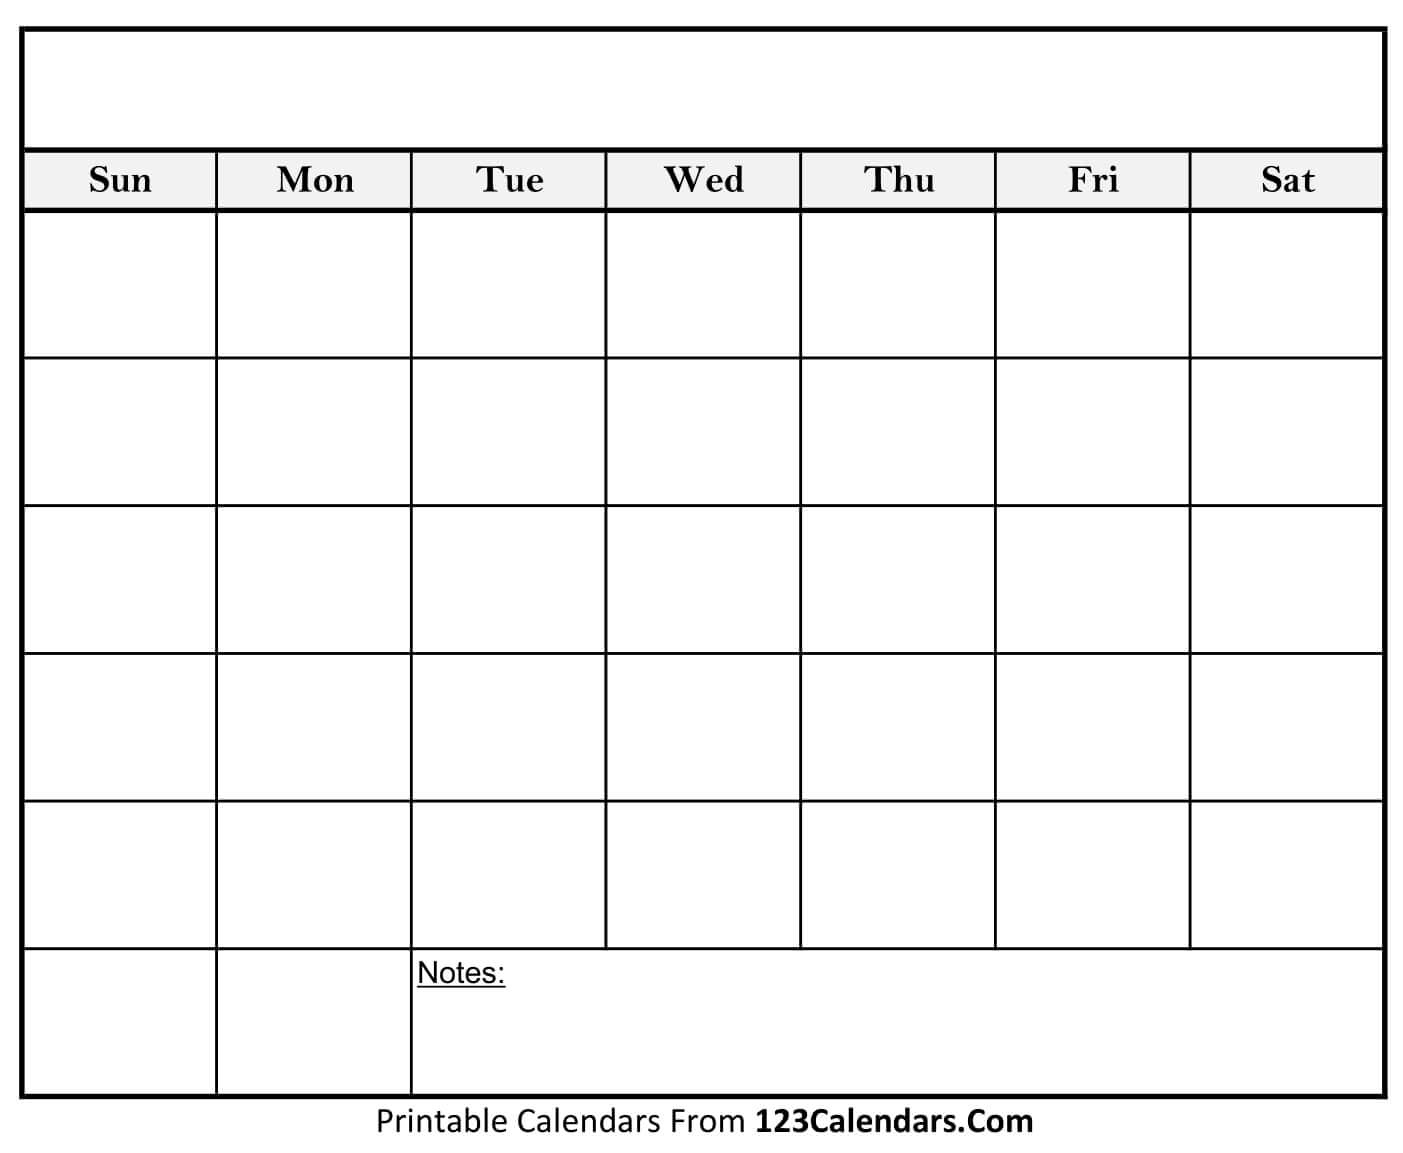 Free Printable Blank Calendar | 123Calendars Exceptional Blank Calendar Template Vertical